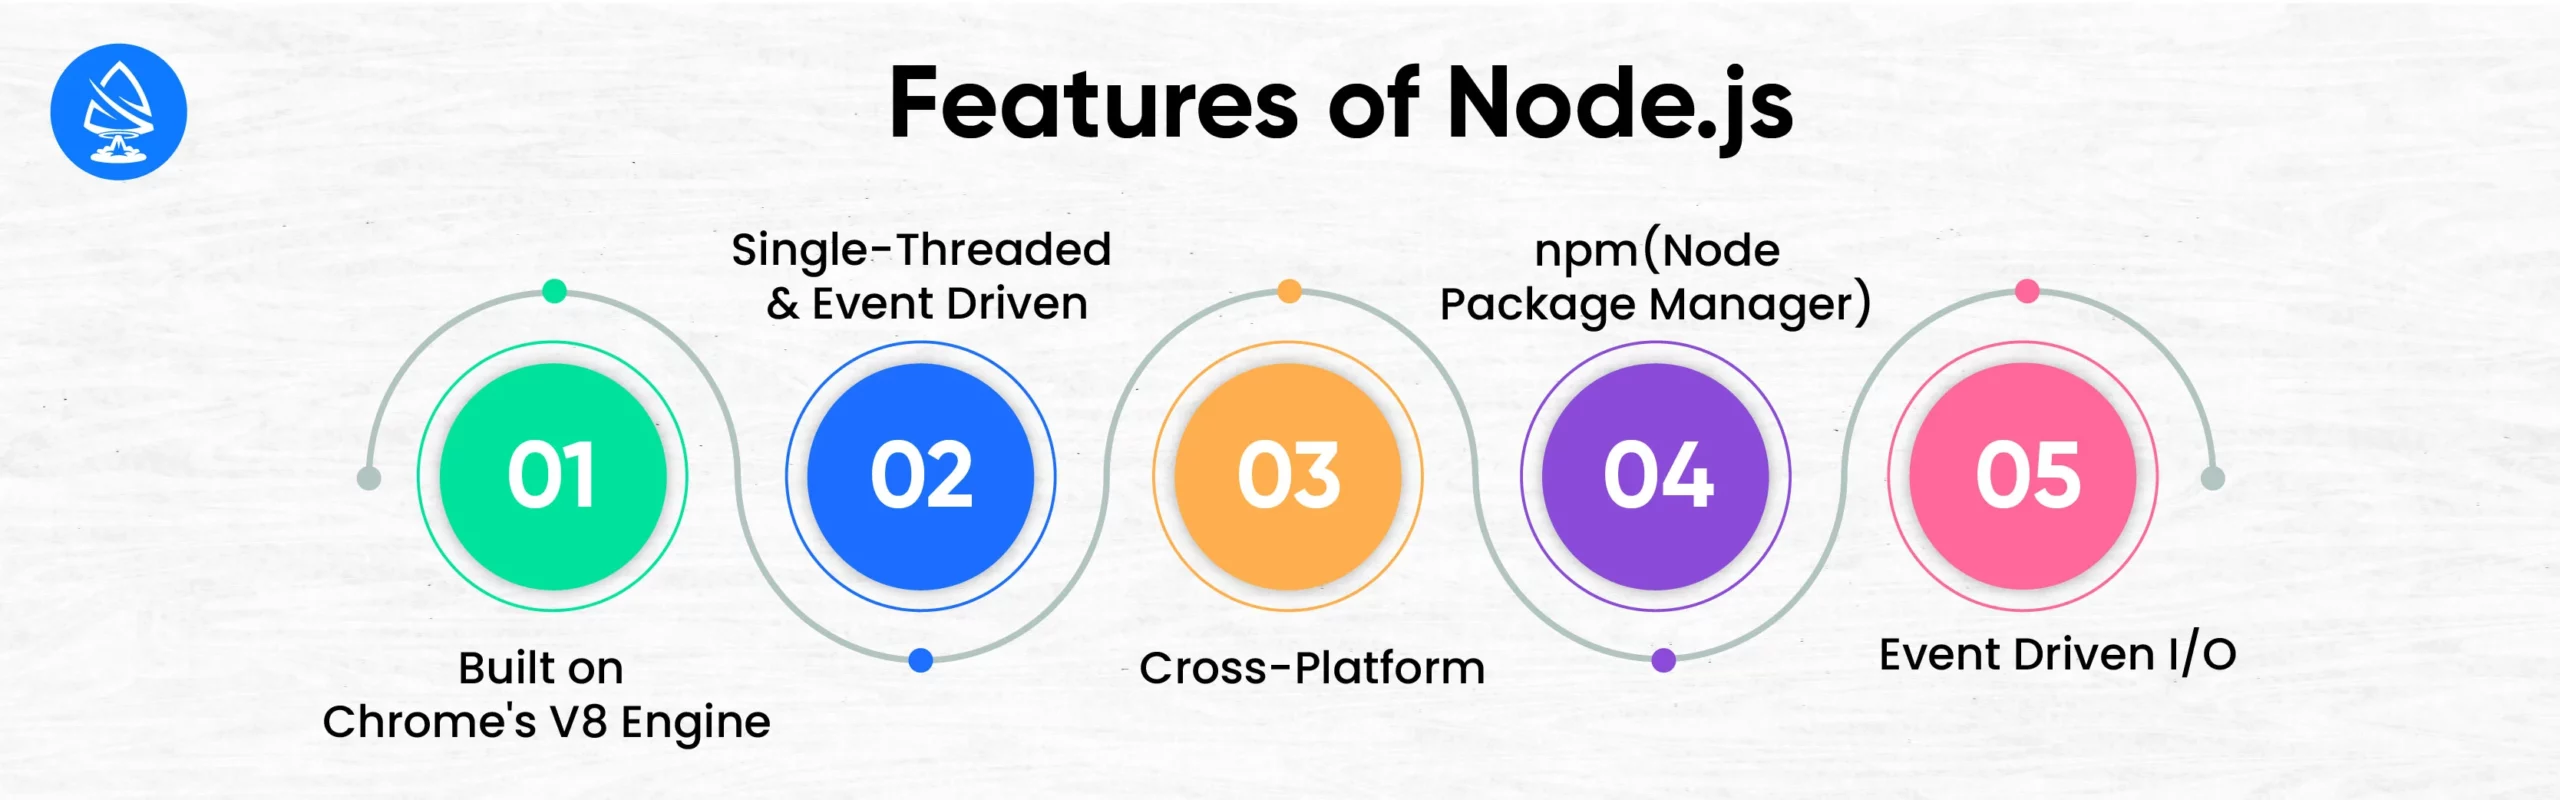 Features of Node.js 